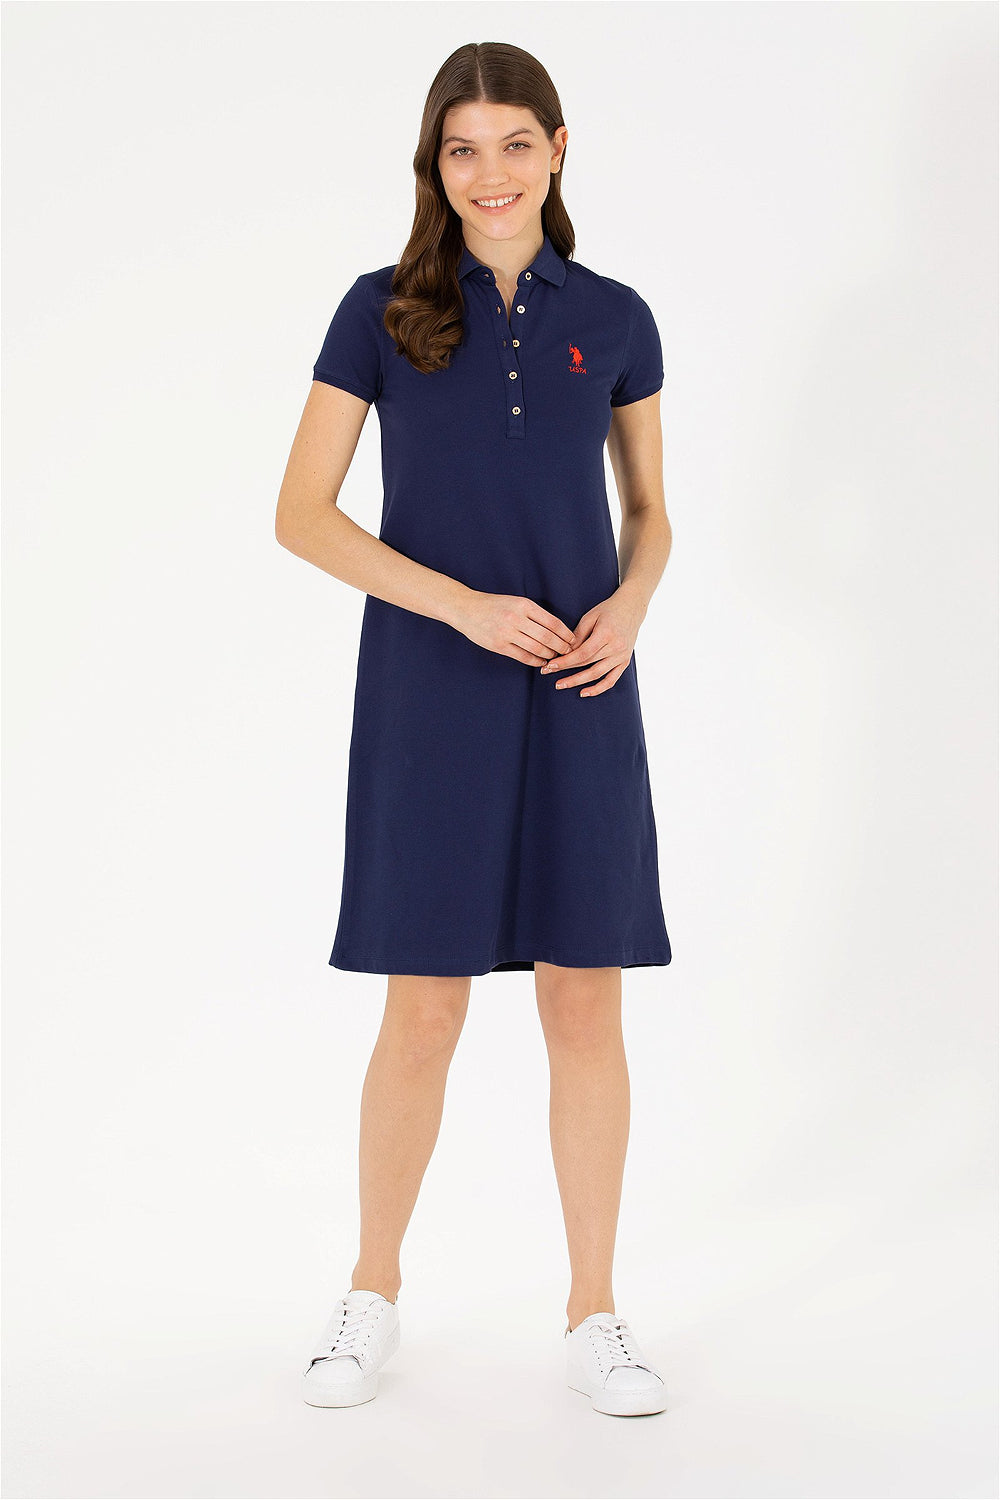 Navy Blue Short Sleeve Dress